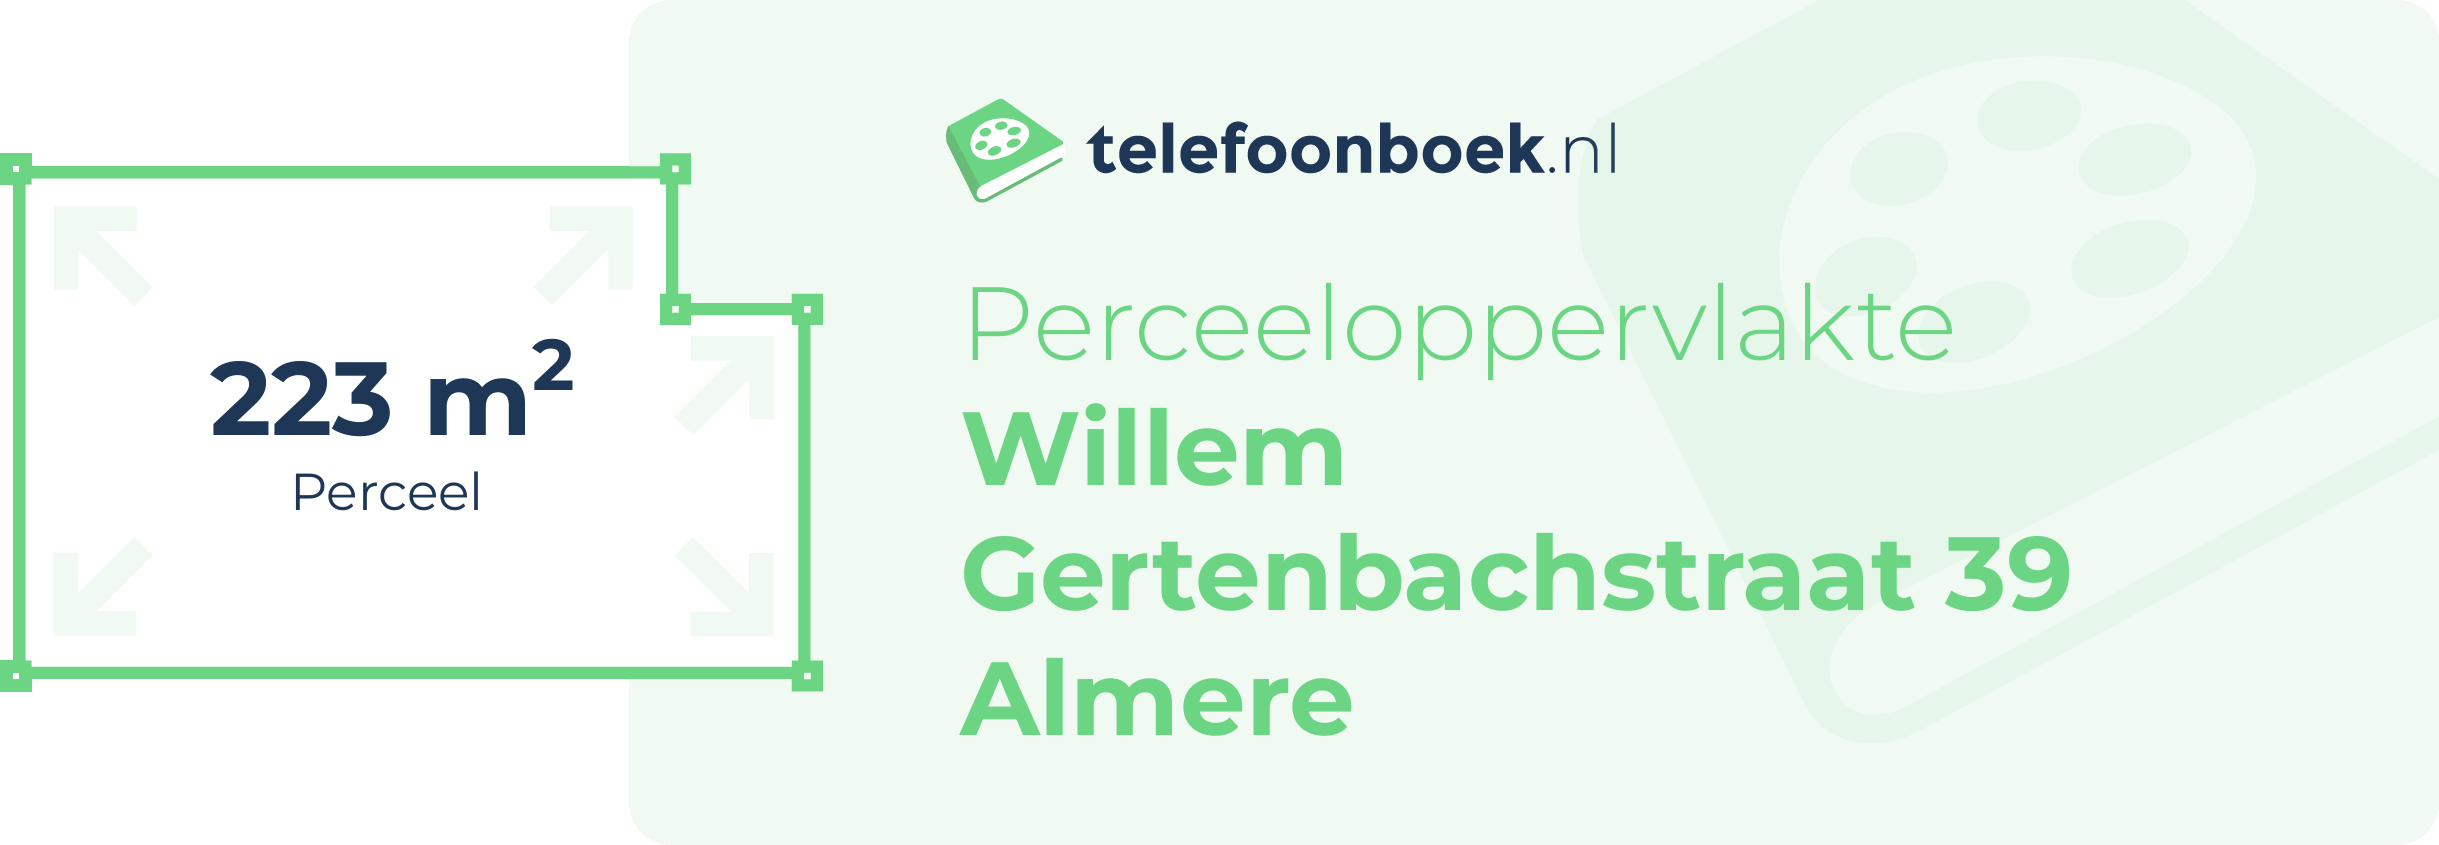 Perceeloppervlakte Willem Gertenbachstraat 39 Almere